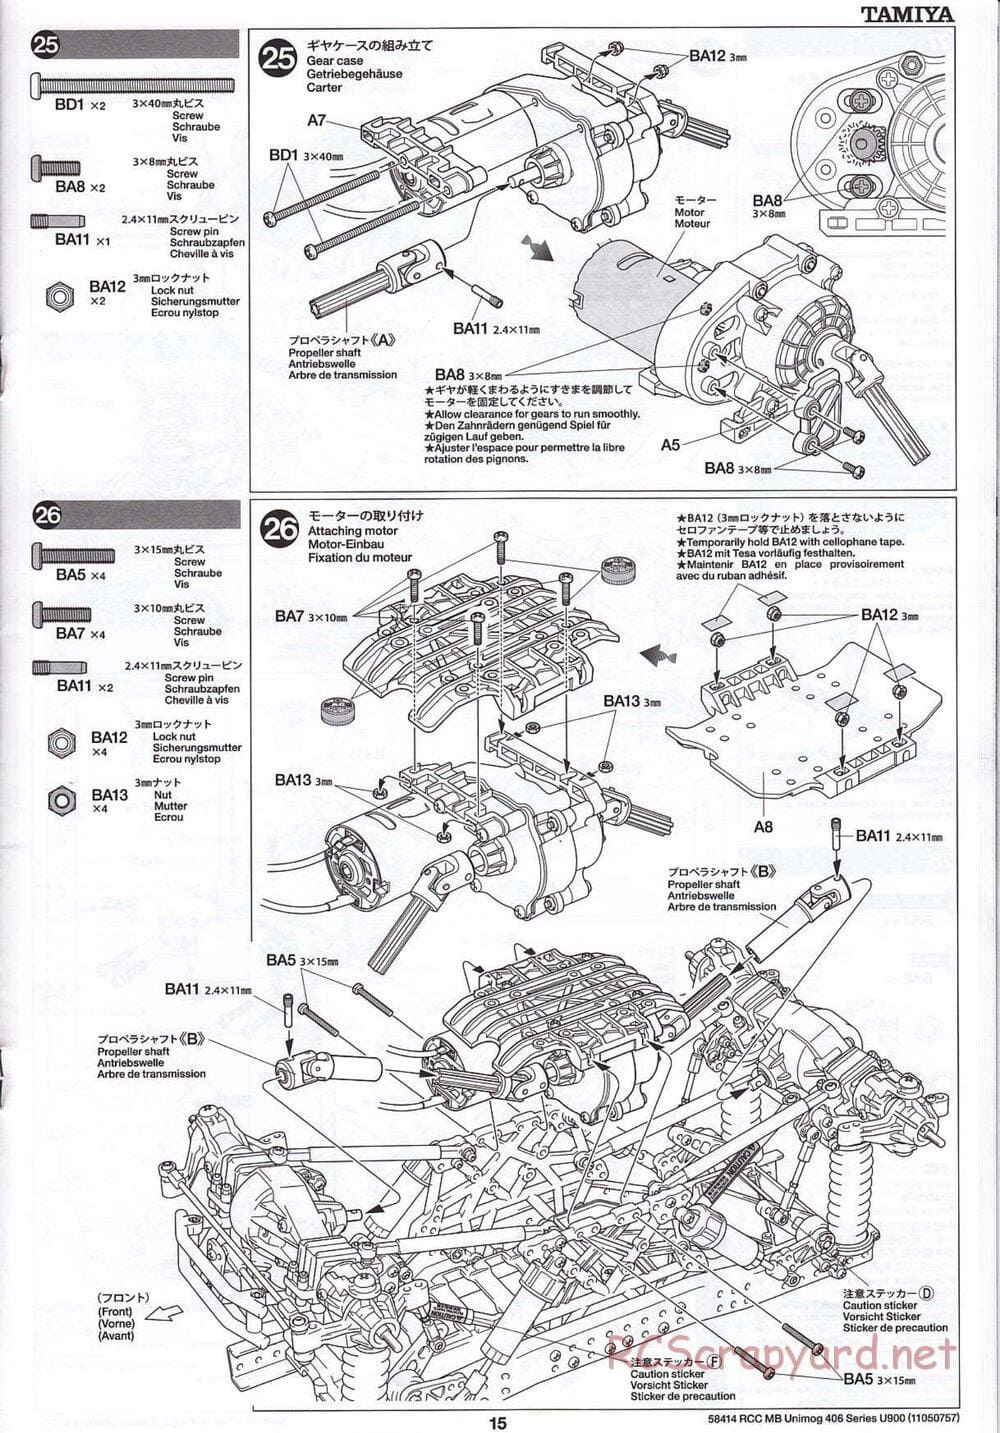 Tamiya - Mercedes-Benz Unimog 406 Series U900 - CR-01 Chassis - Manual - Page 15